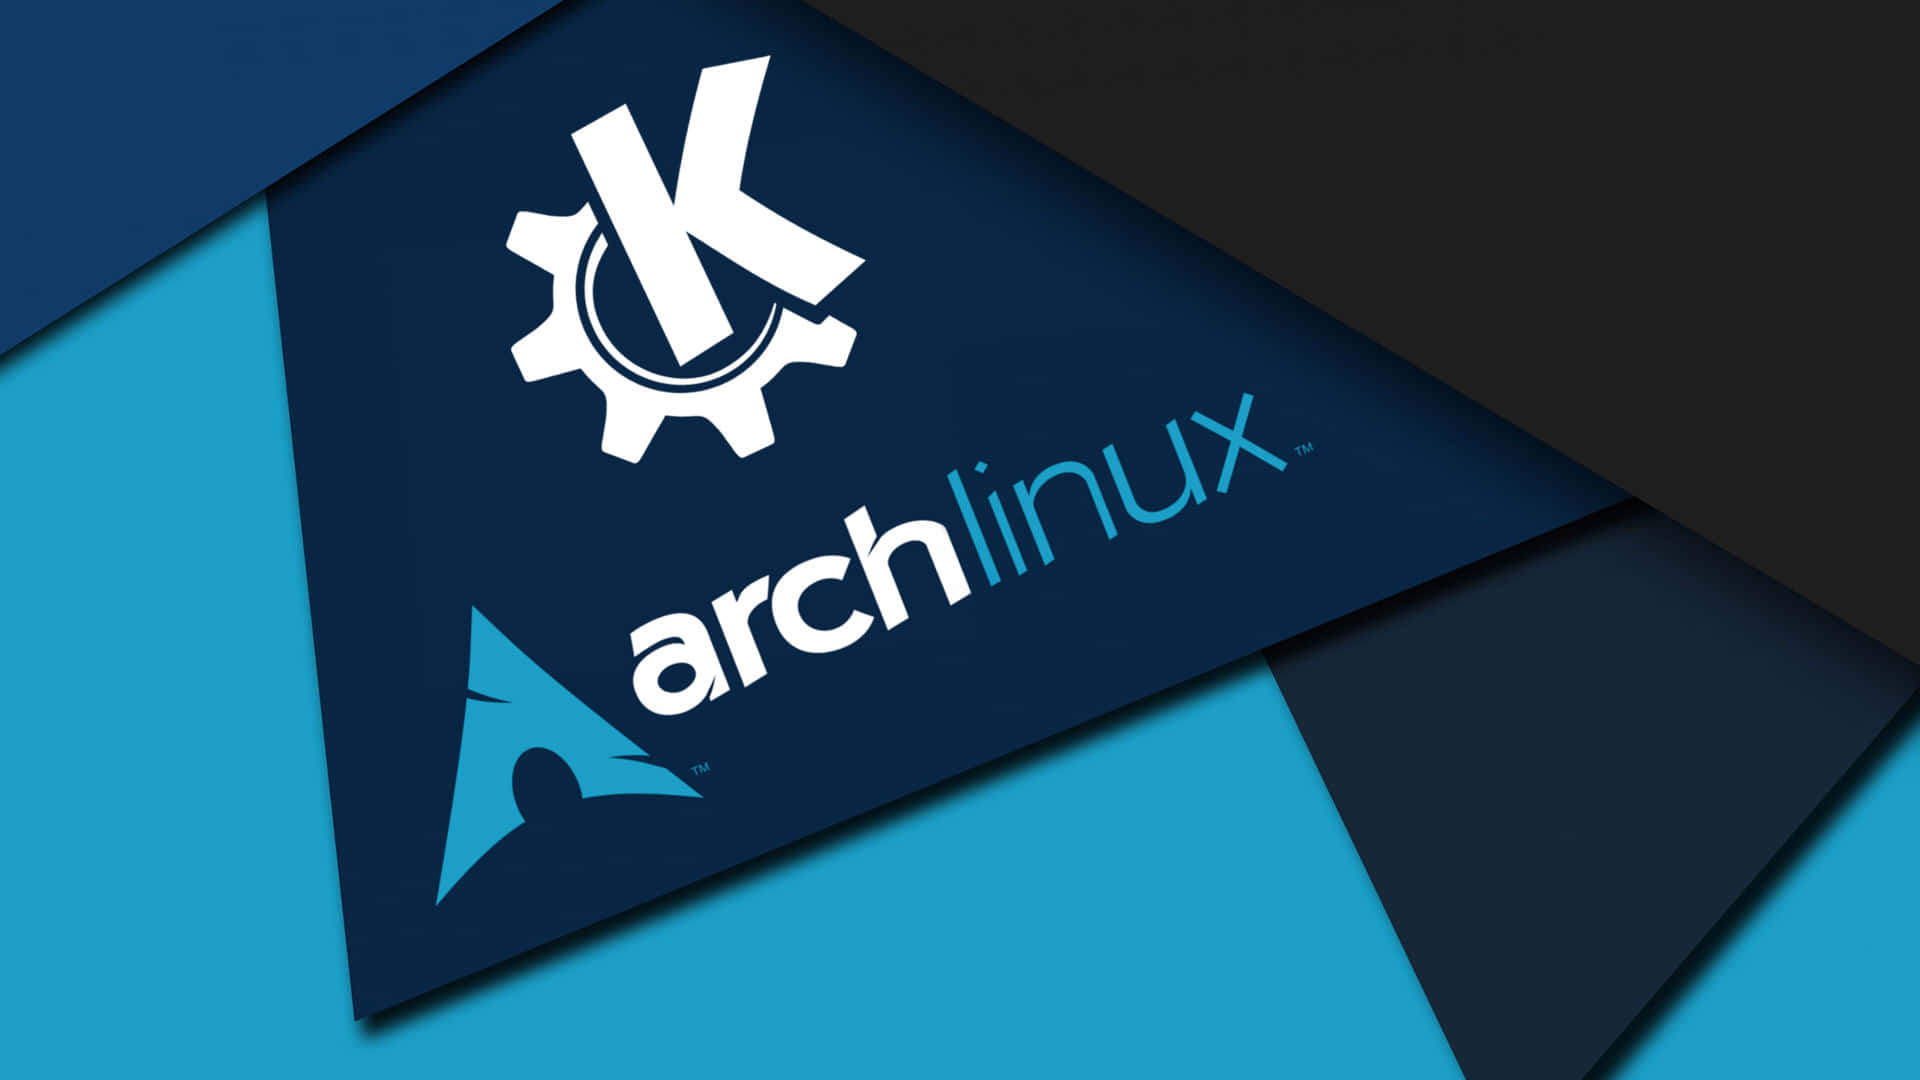 Elegantefondo De Pantalla De Arch Linux. Fondo de pantalla